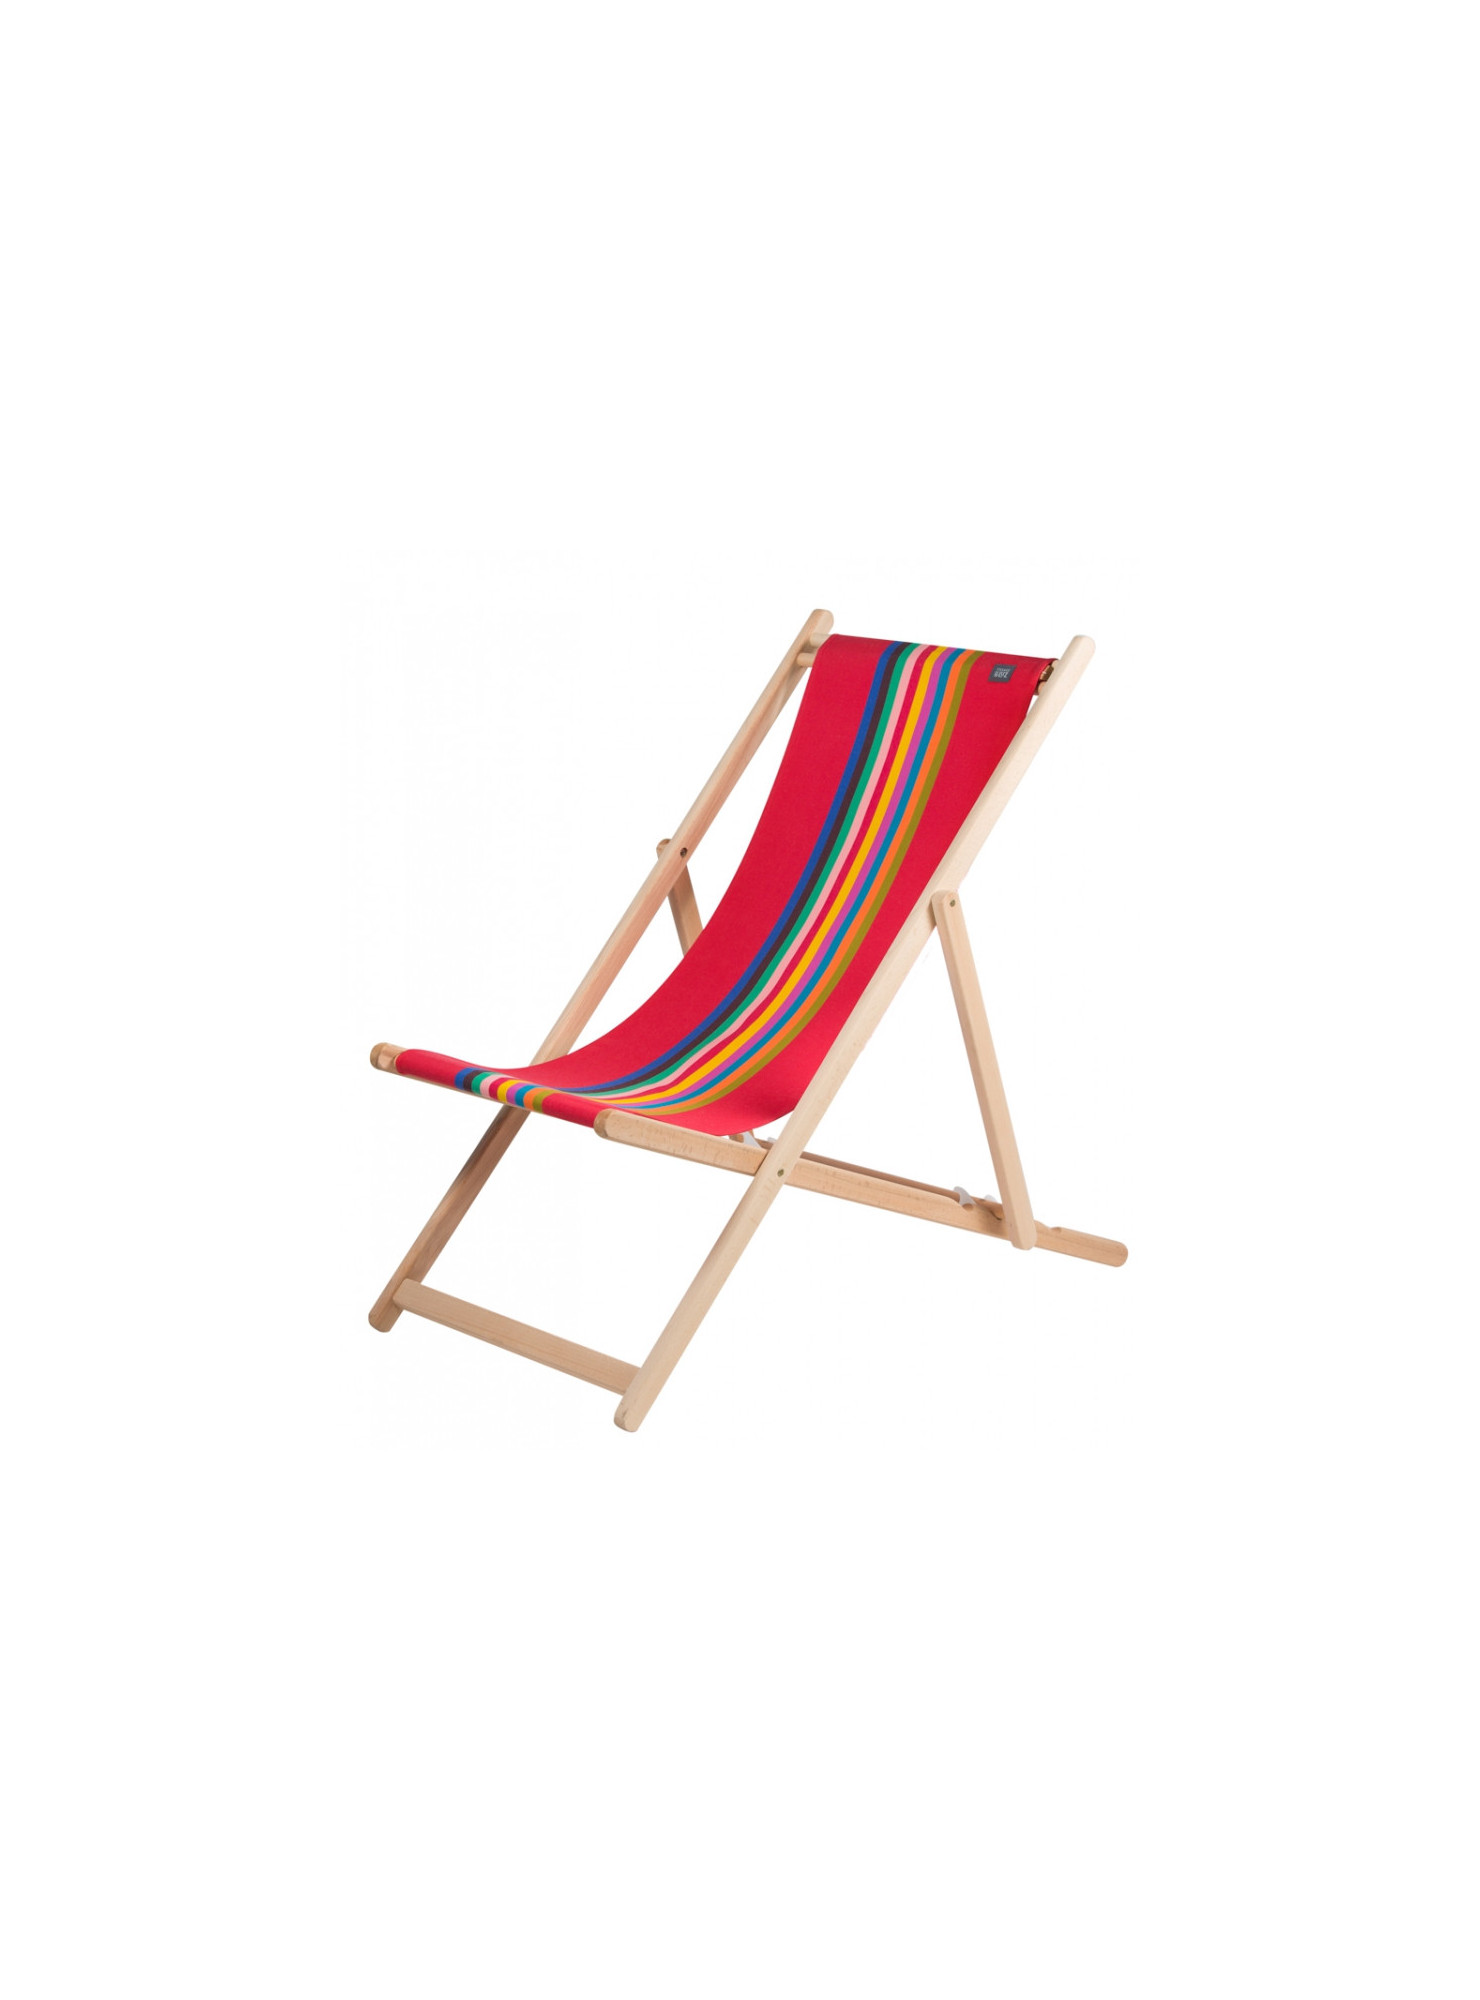 Transat Marbella en tissu basque chaise longue chilienne basque